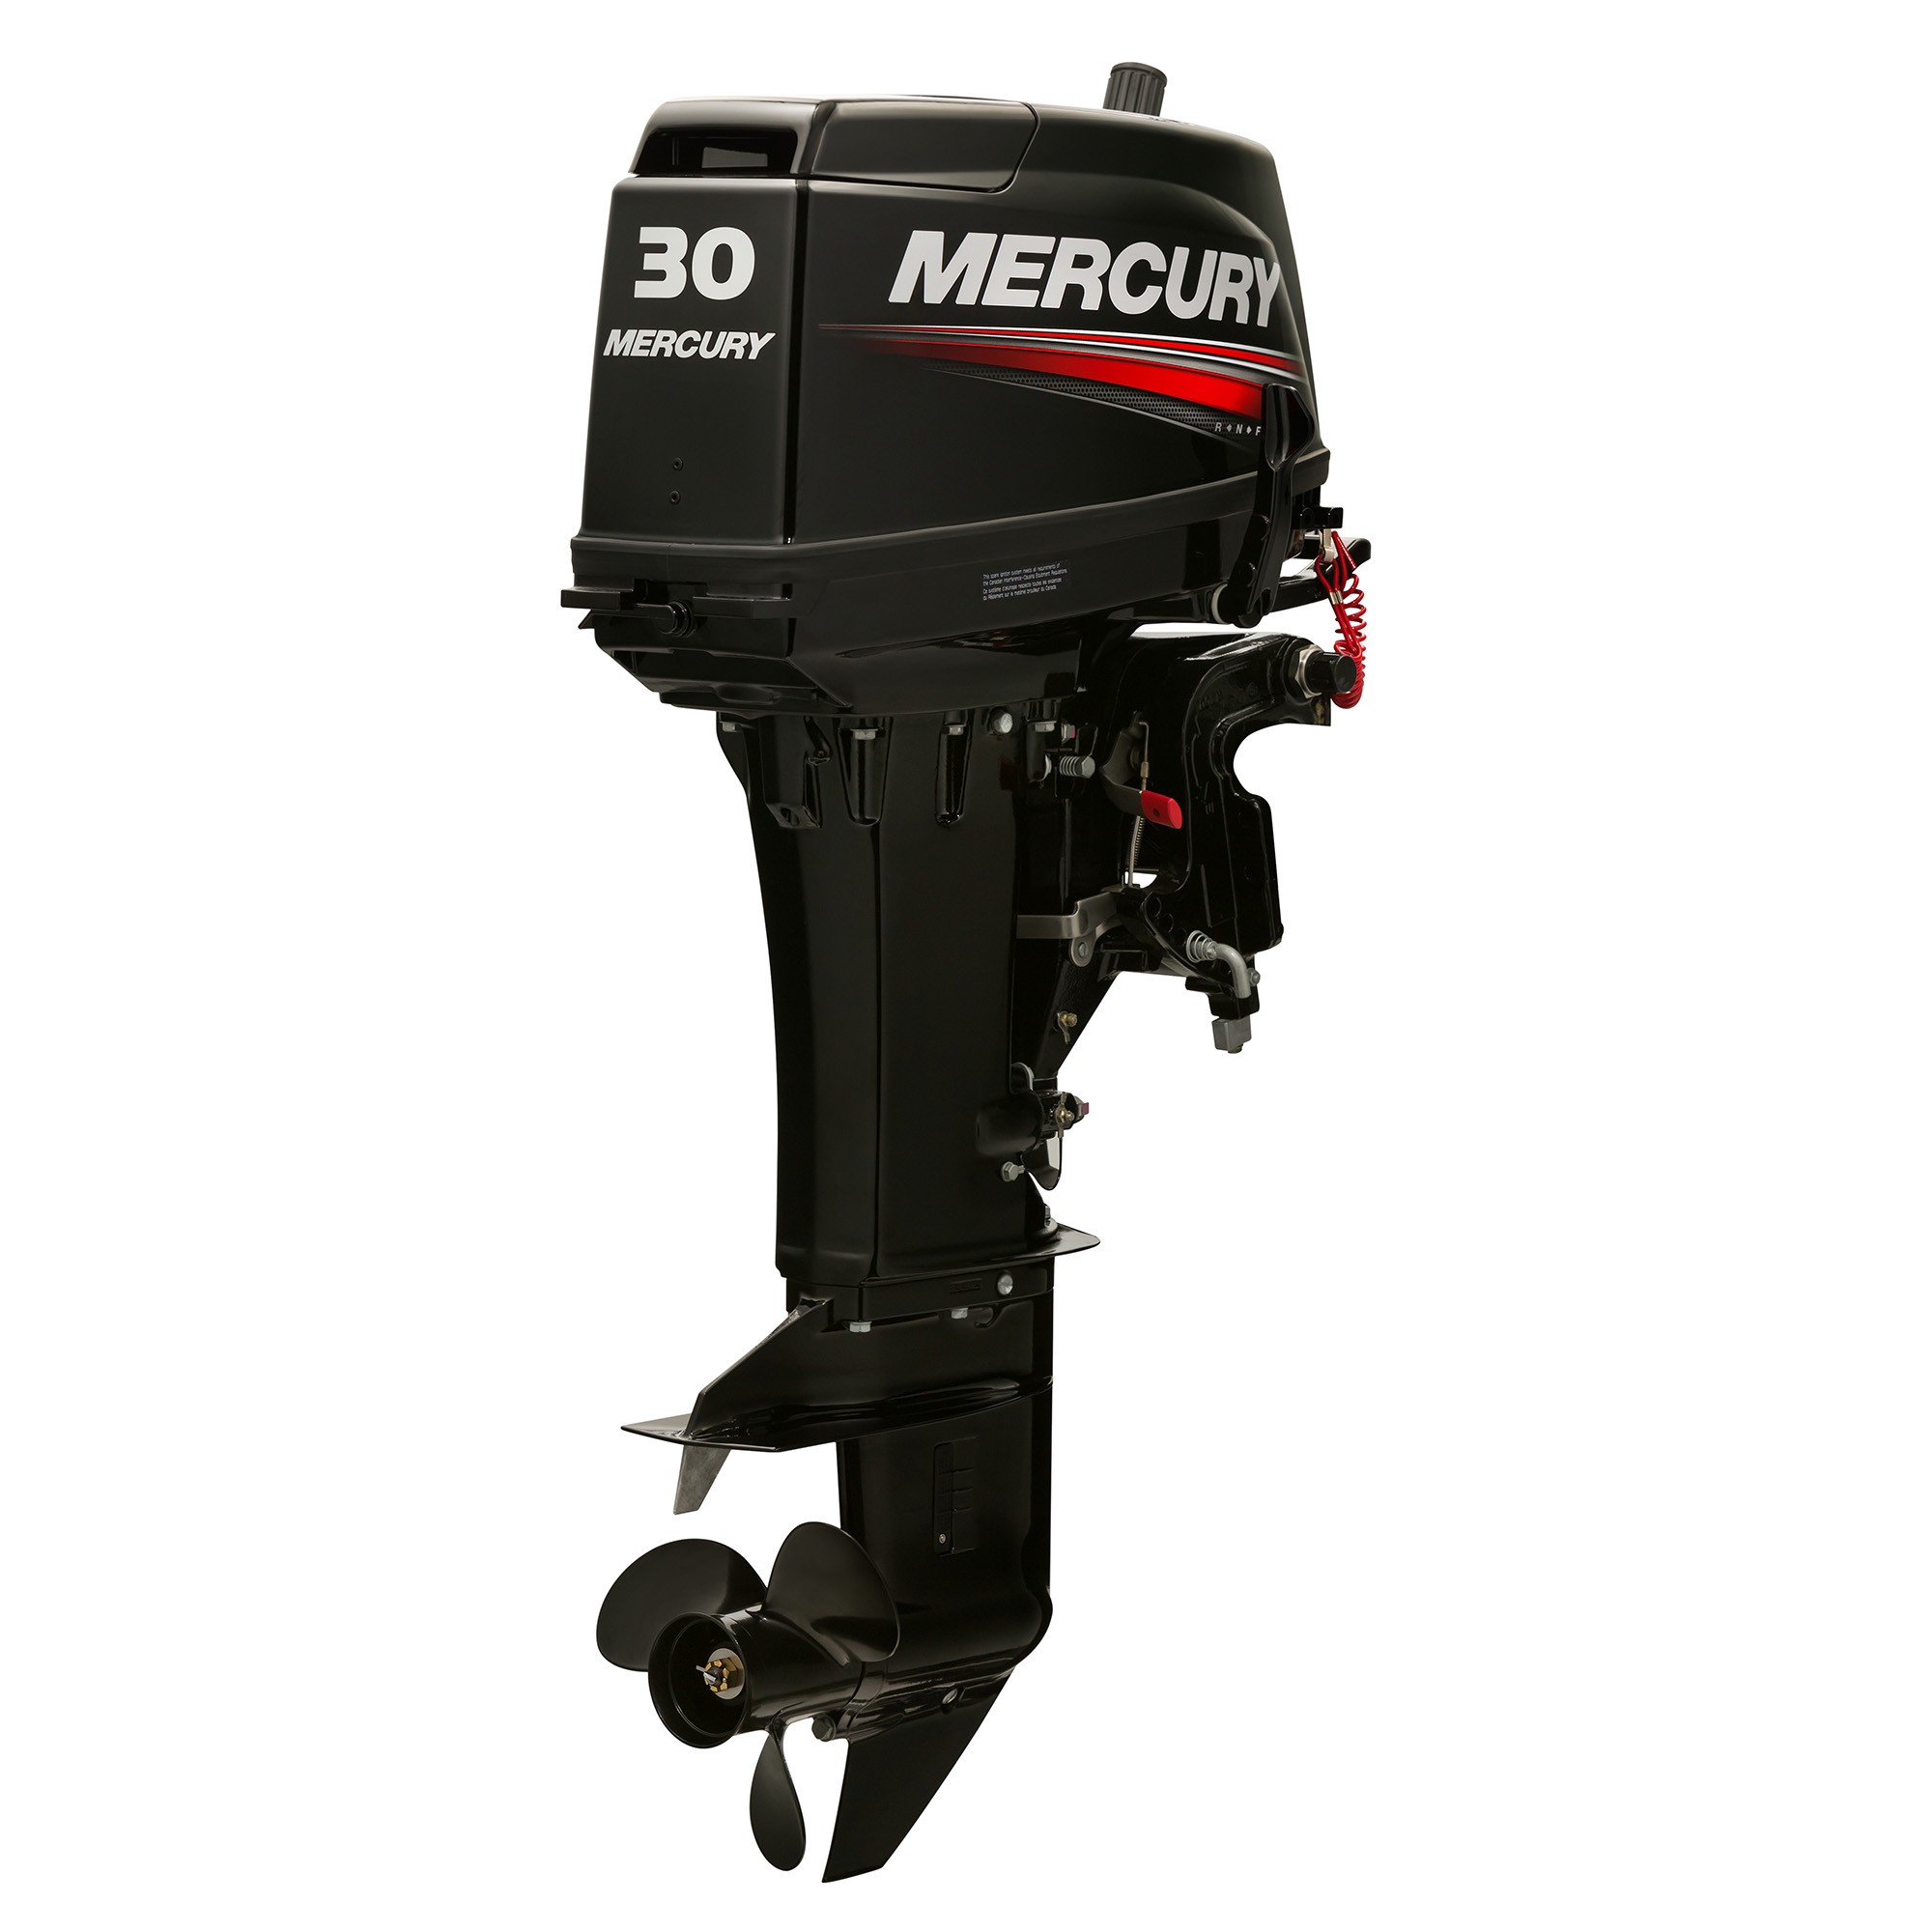  мотор Mercury ME 30 ML TwoStroke:  по цене | Lodkamarket